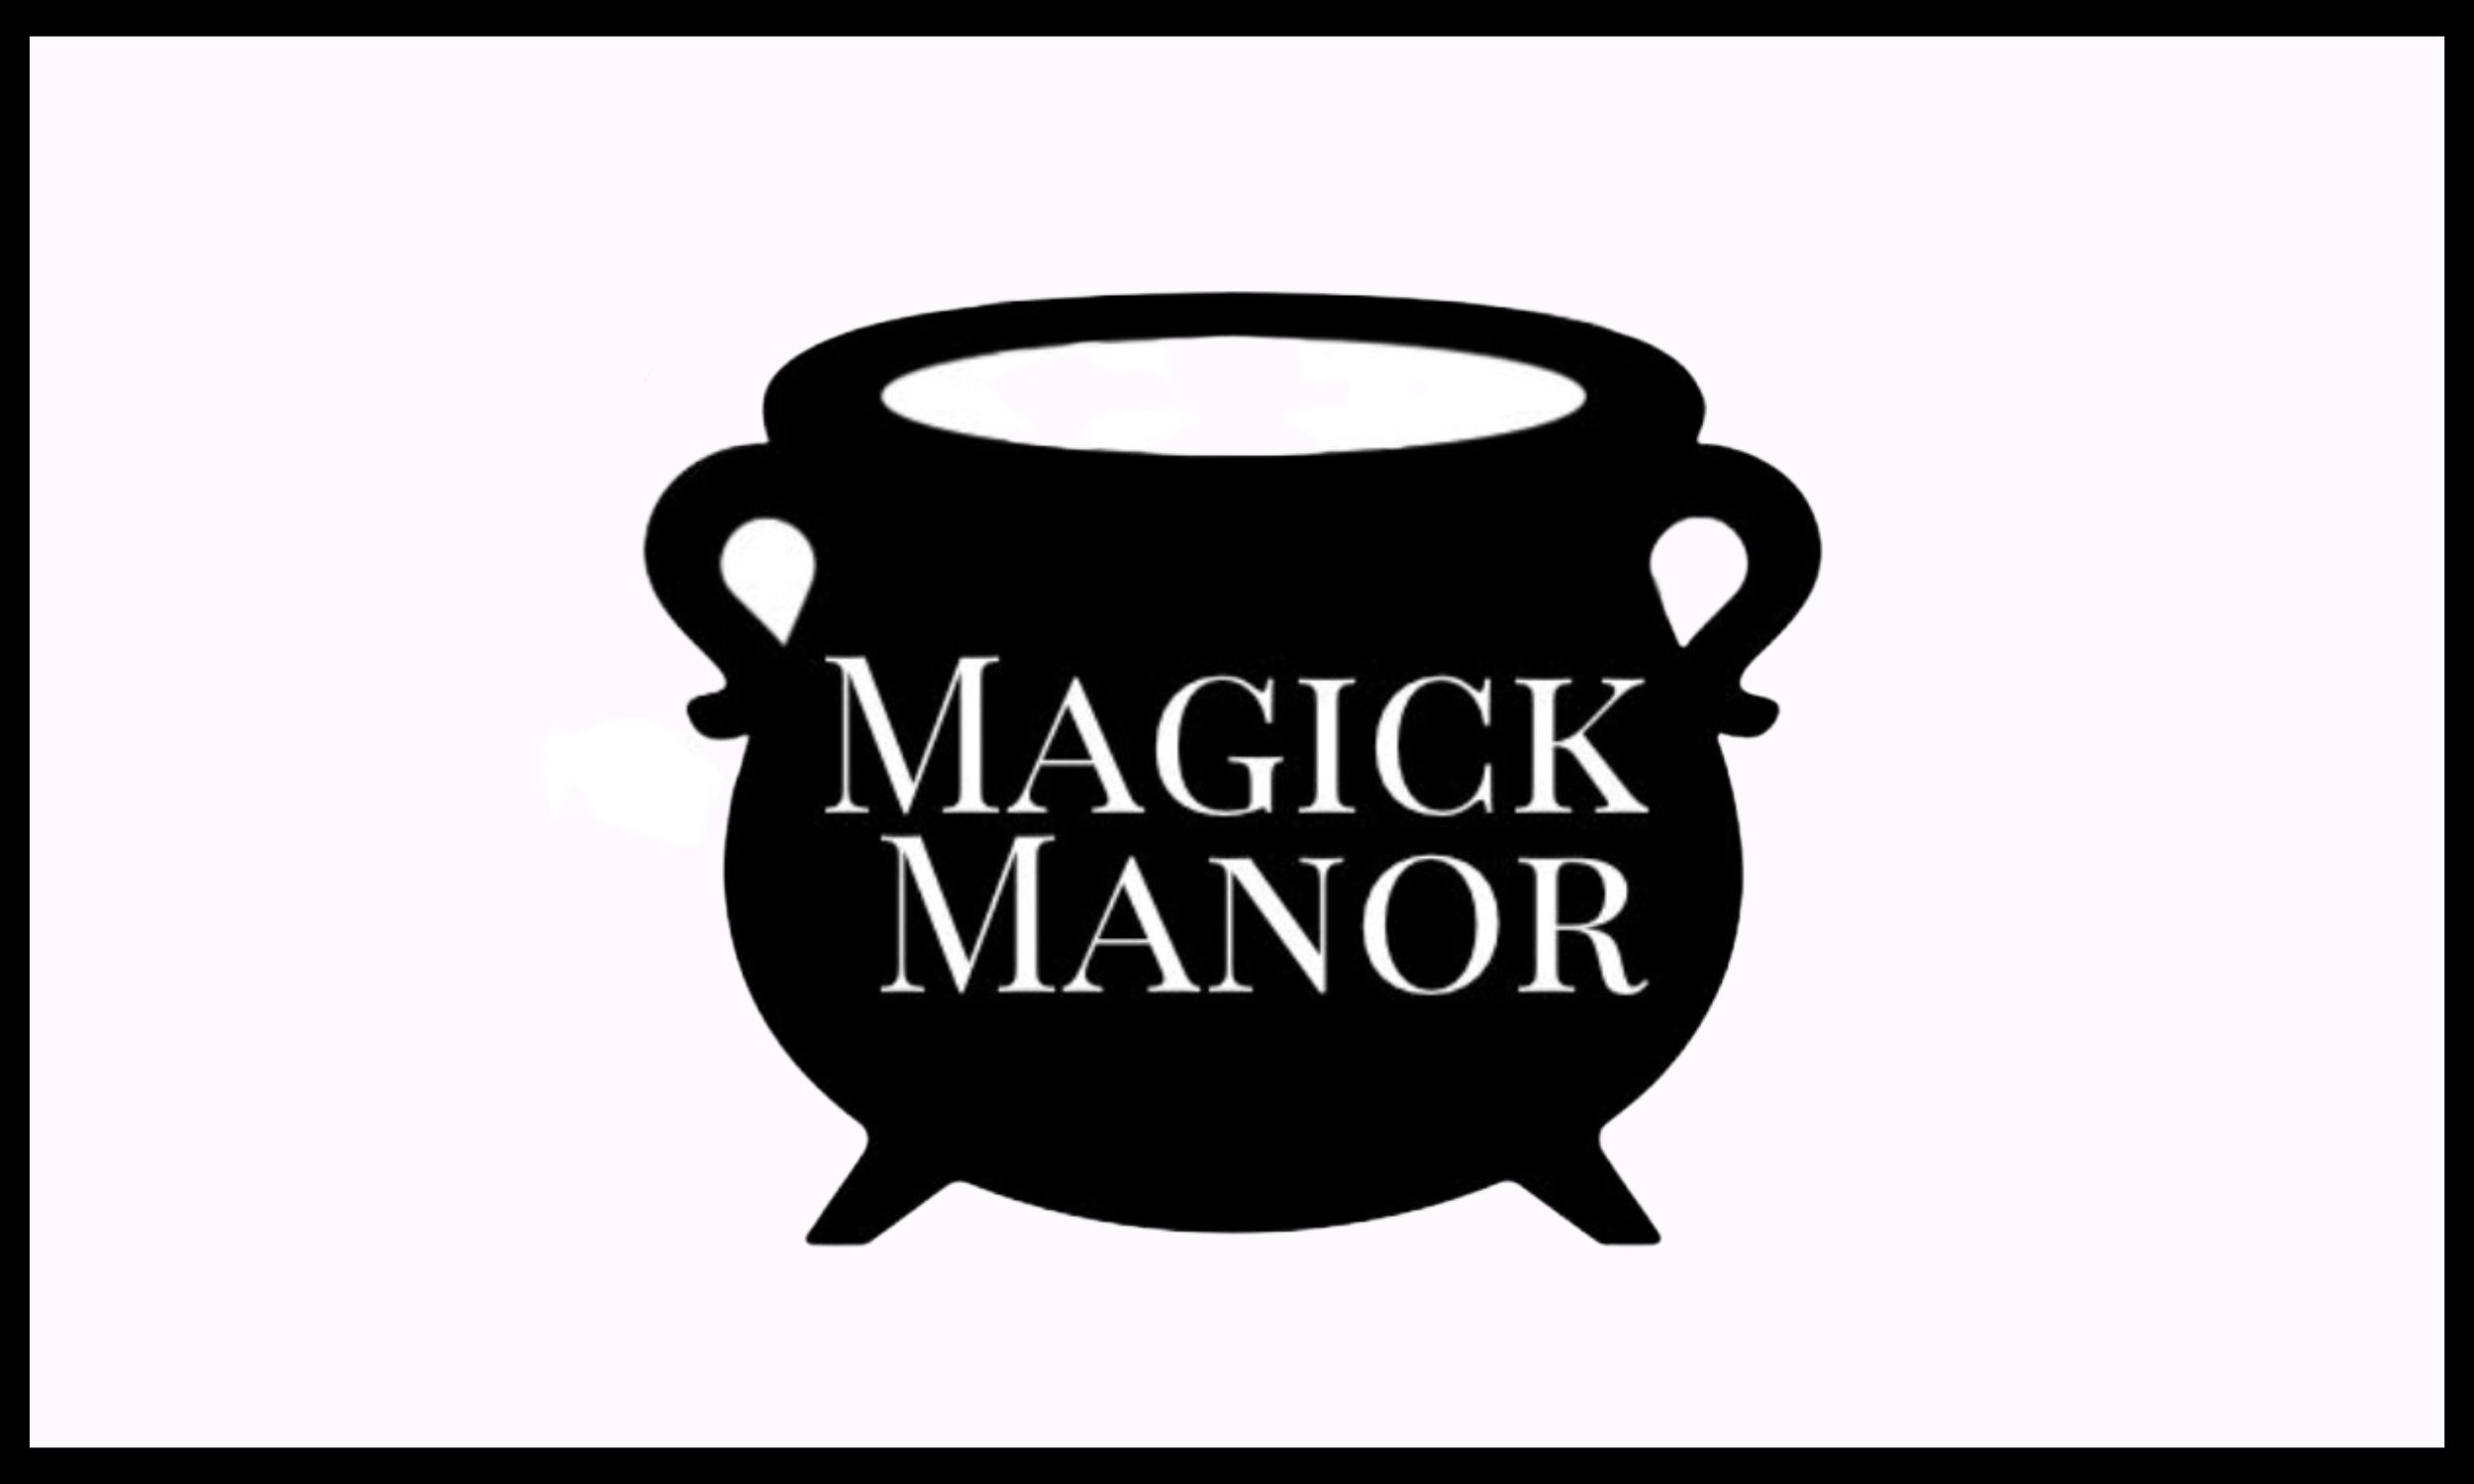 Magick Manor